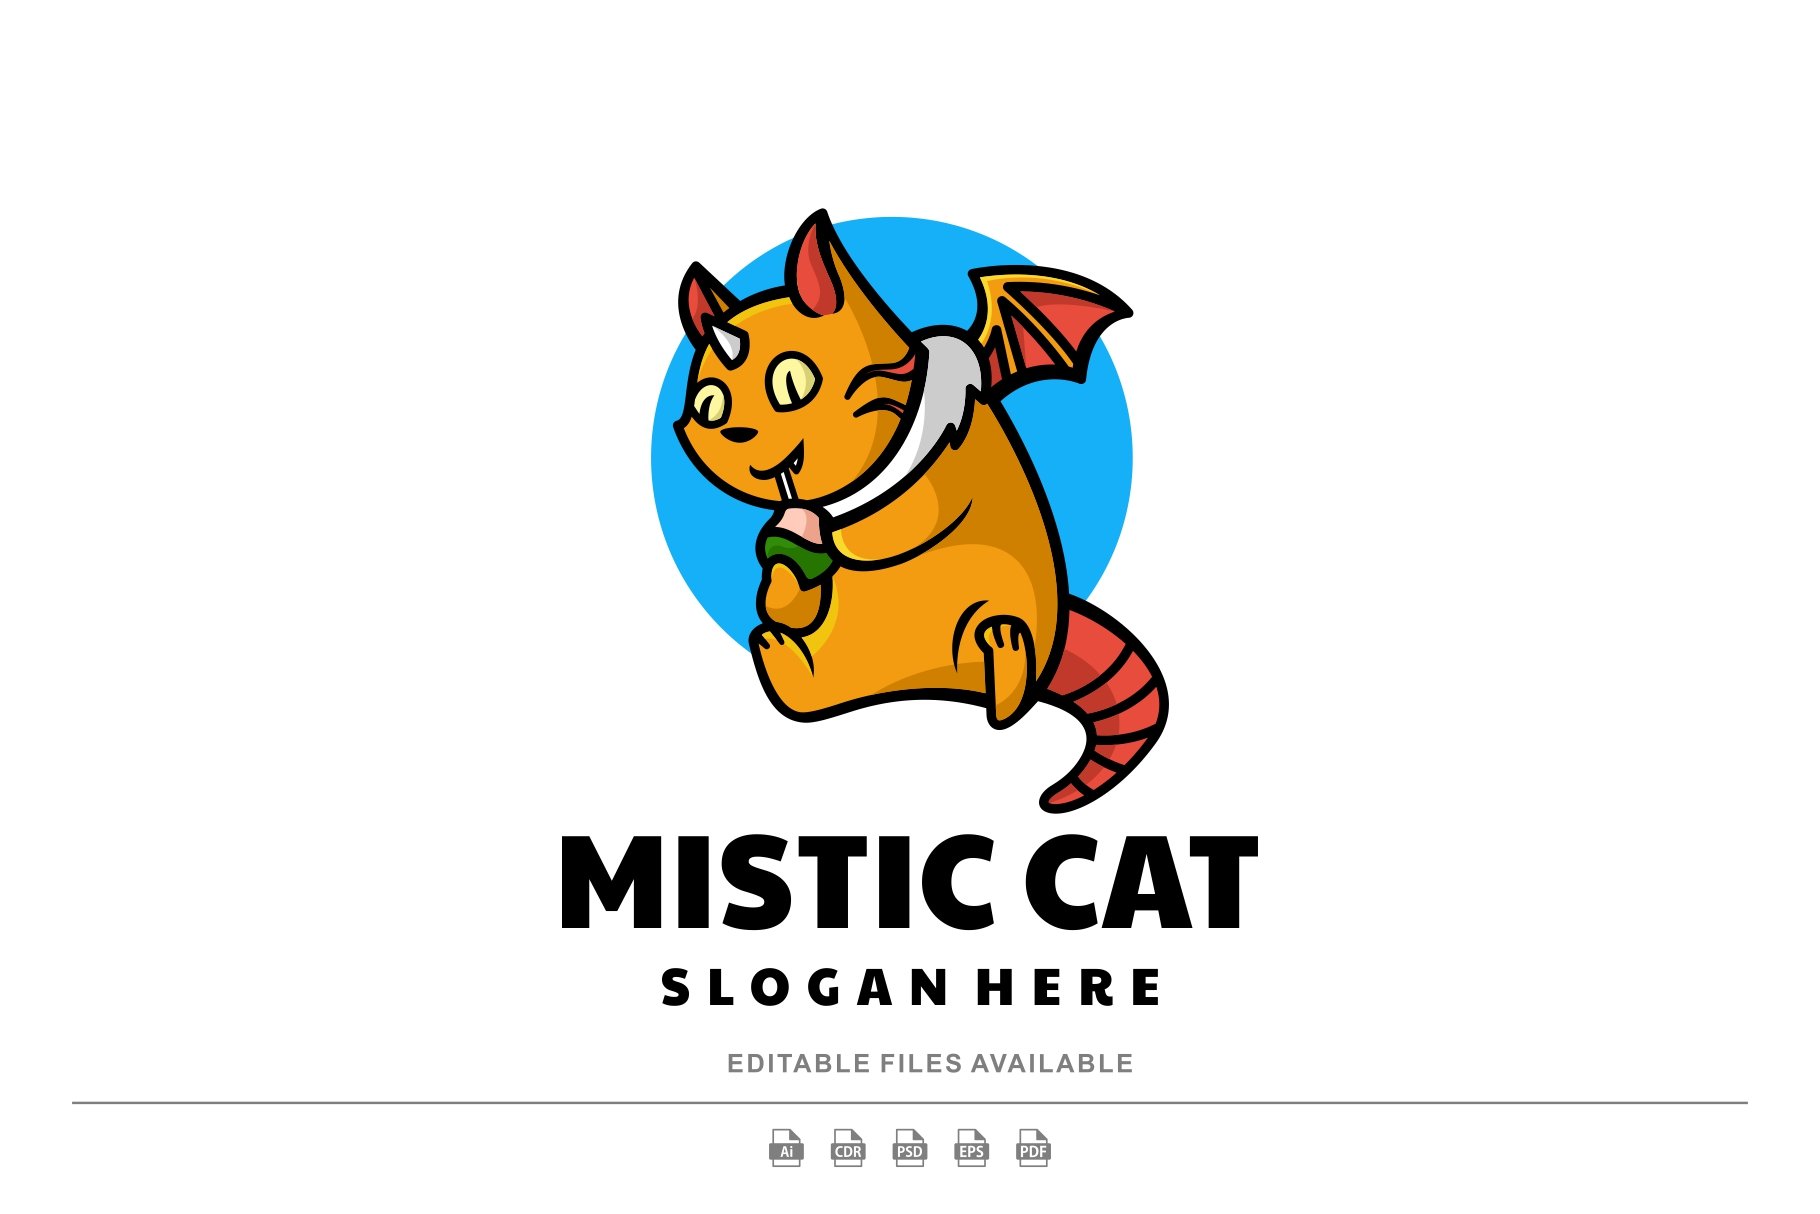 Mystic Cat Mascot Logo cover image.